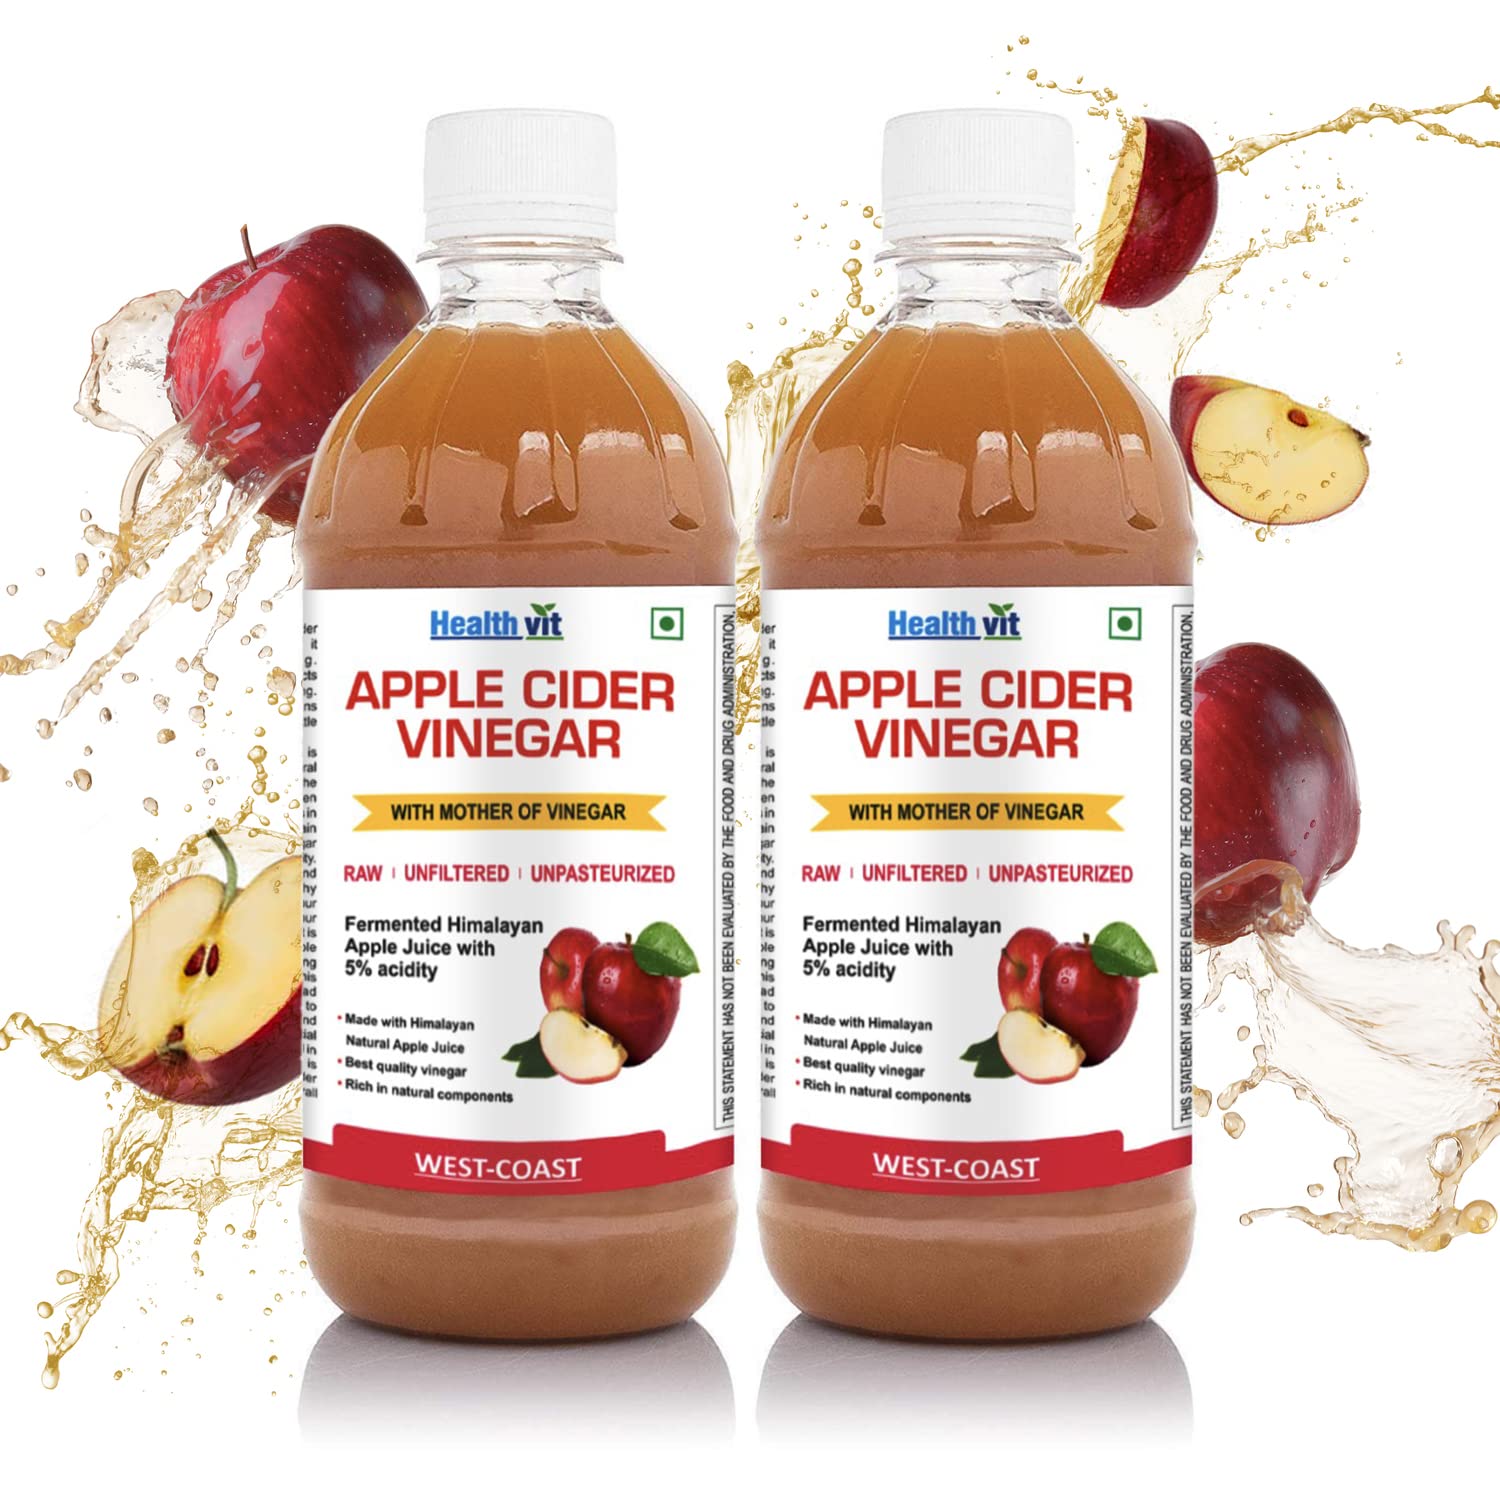 Healthvit Apple Cider Vinegar 500ml - With Mother Vinegar- Pack of 2